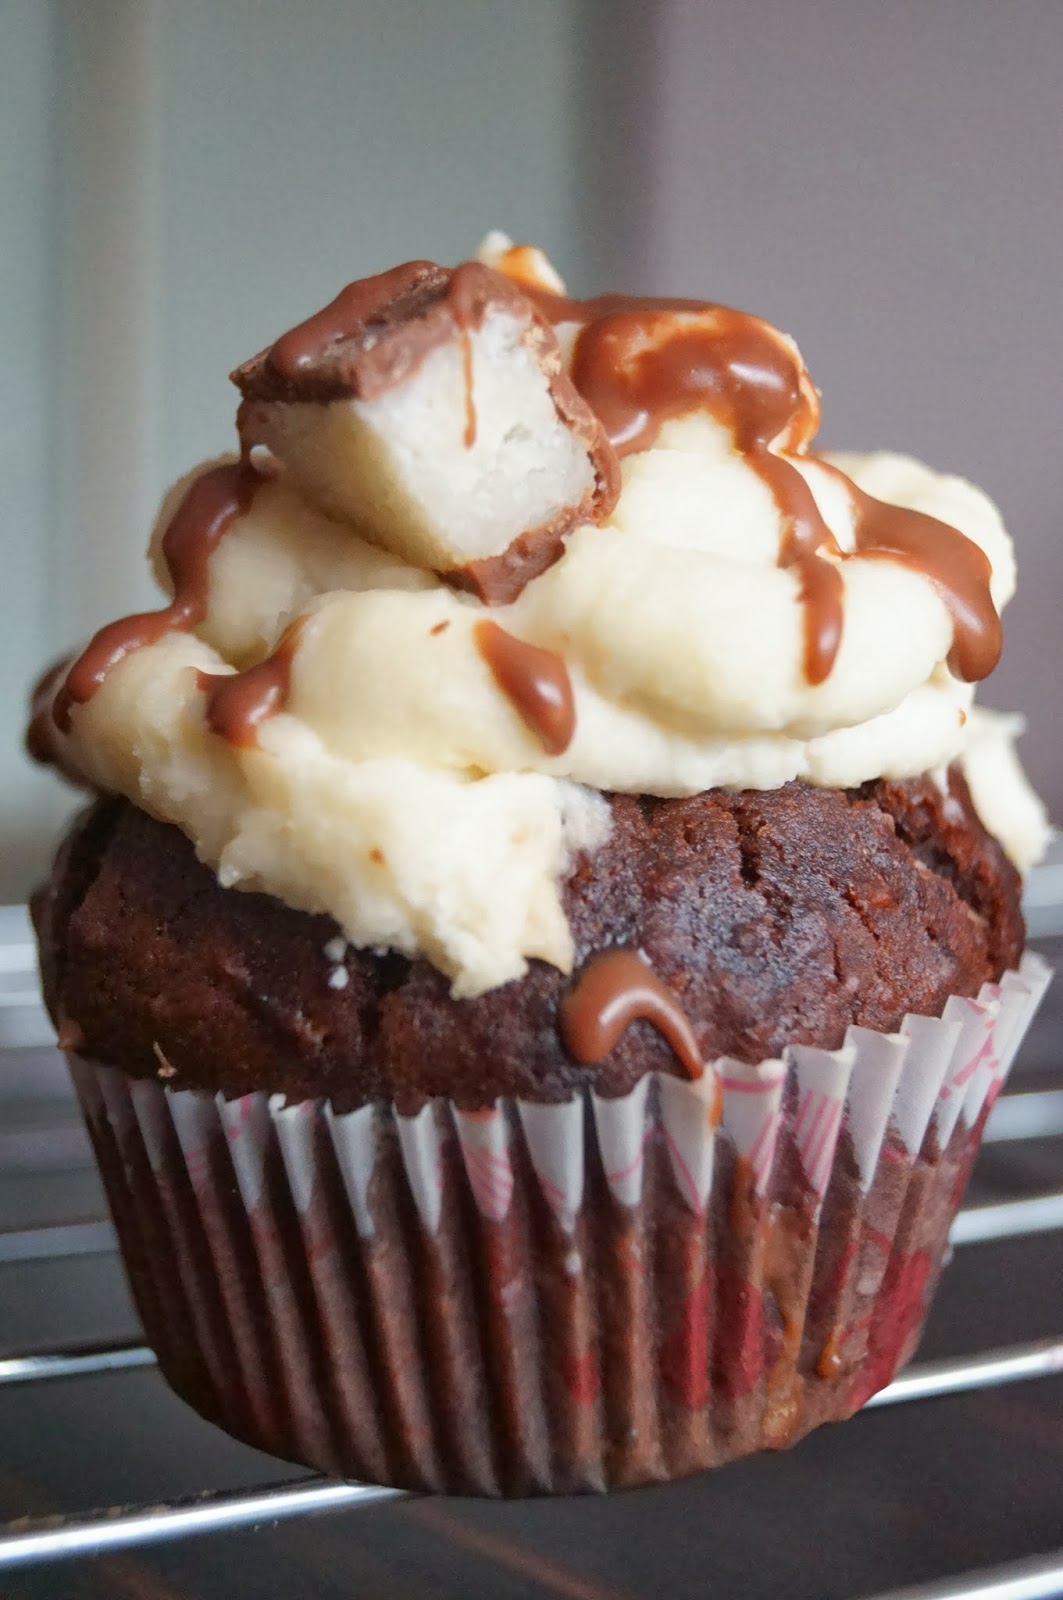 http://sweetmedicines.blogspot.com/2014/02/bounty-cupcakes.html